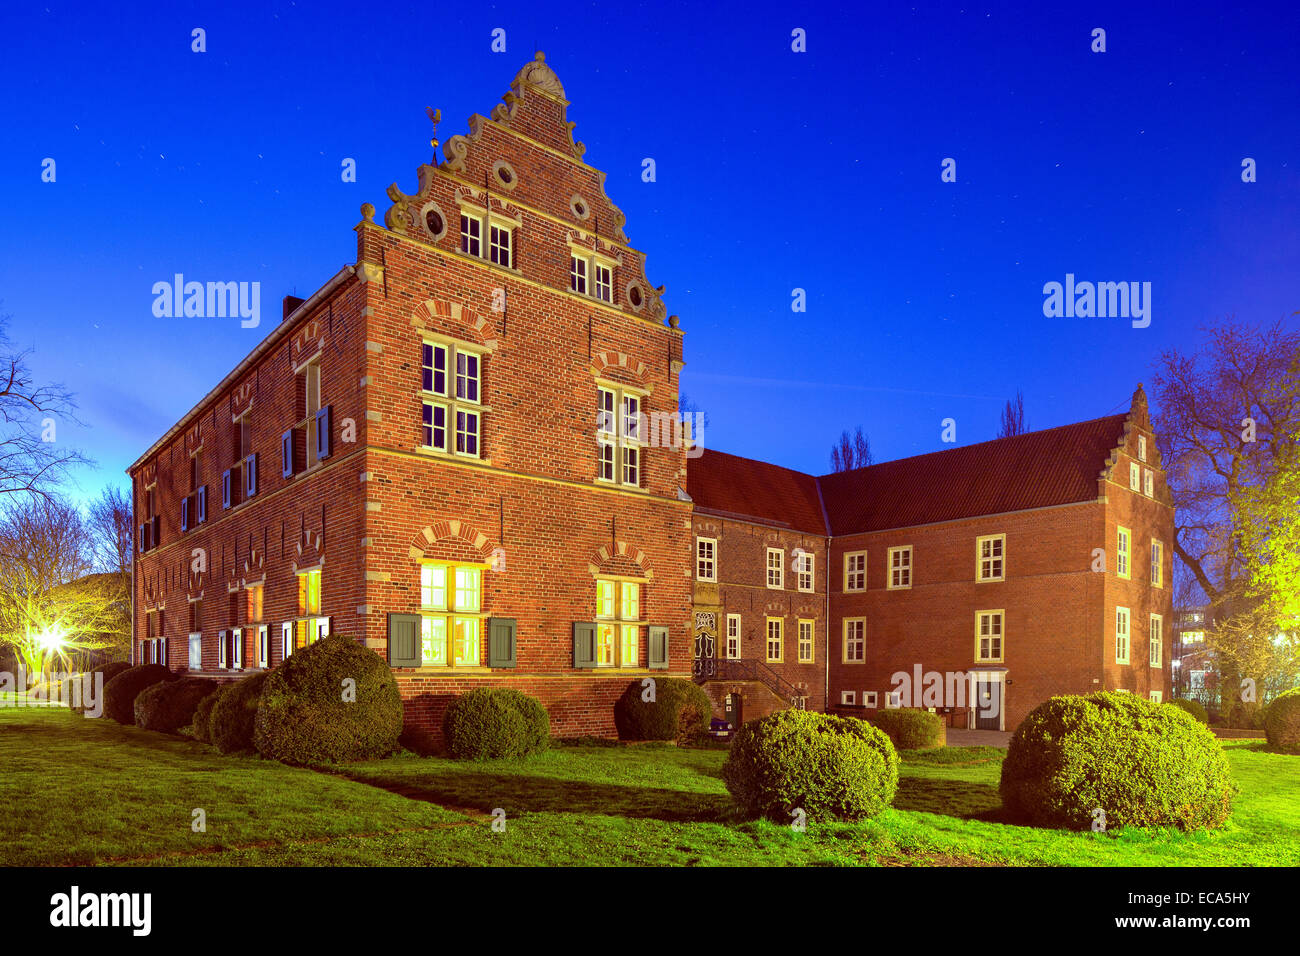 Haneburg mansion, Freesenhuus, Leer, East Frisia, Lower Saxony, Germany Stock Photo